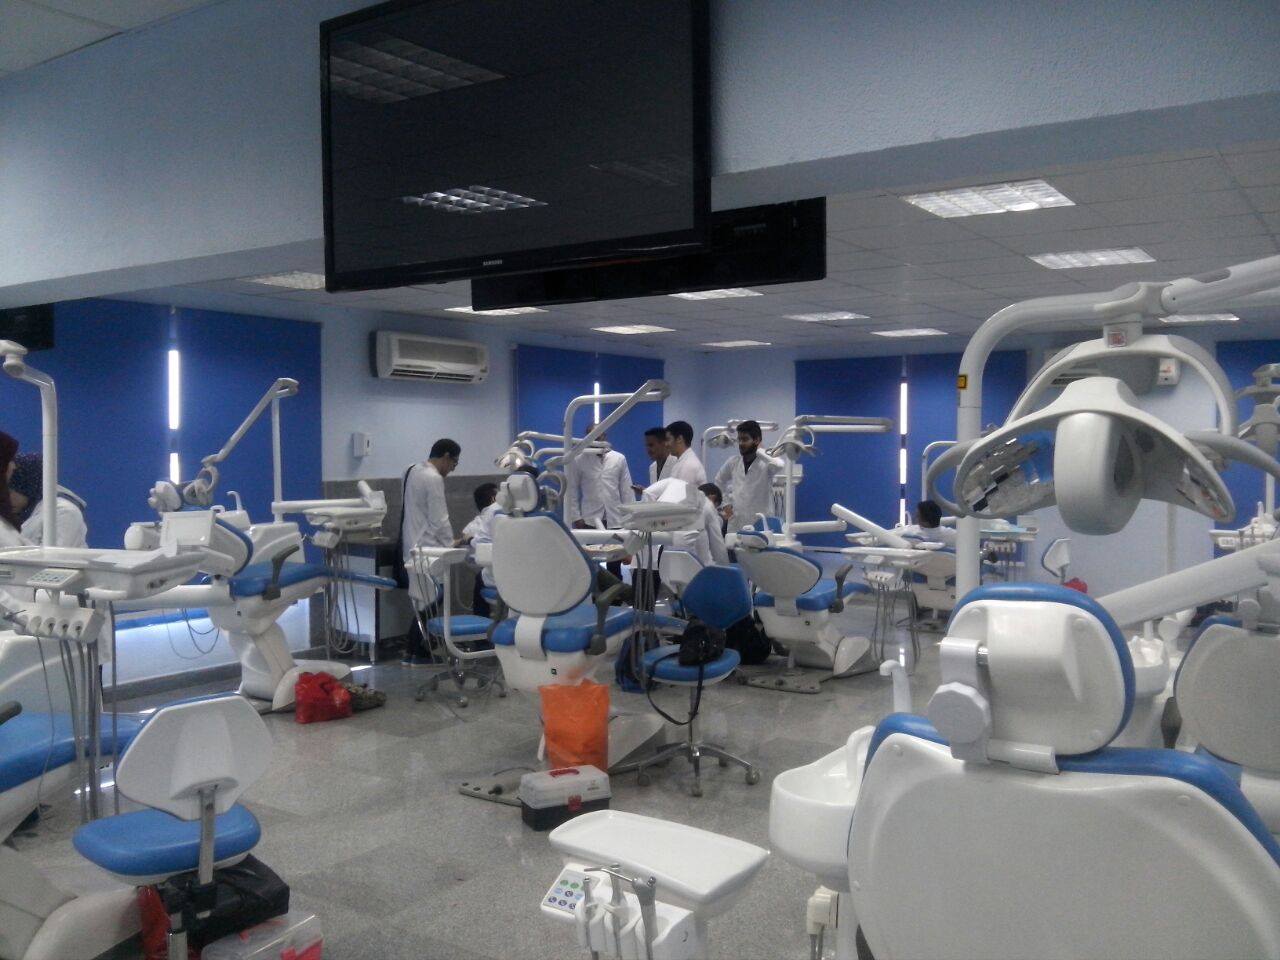 Dental clinic 3